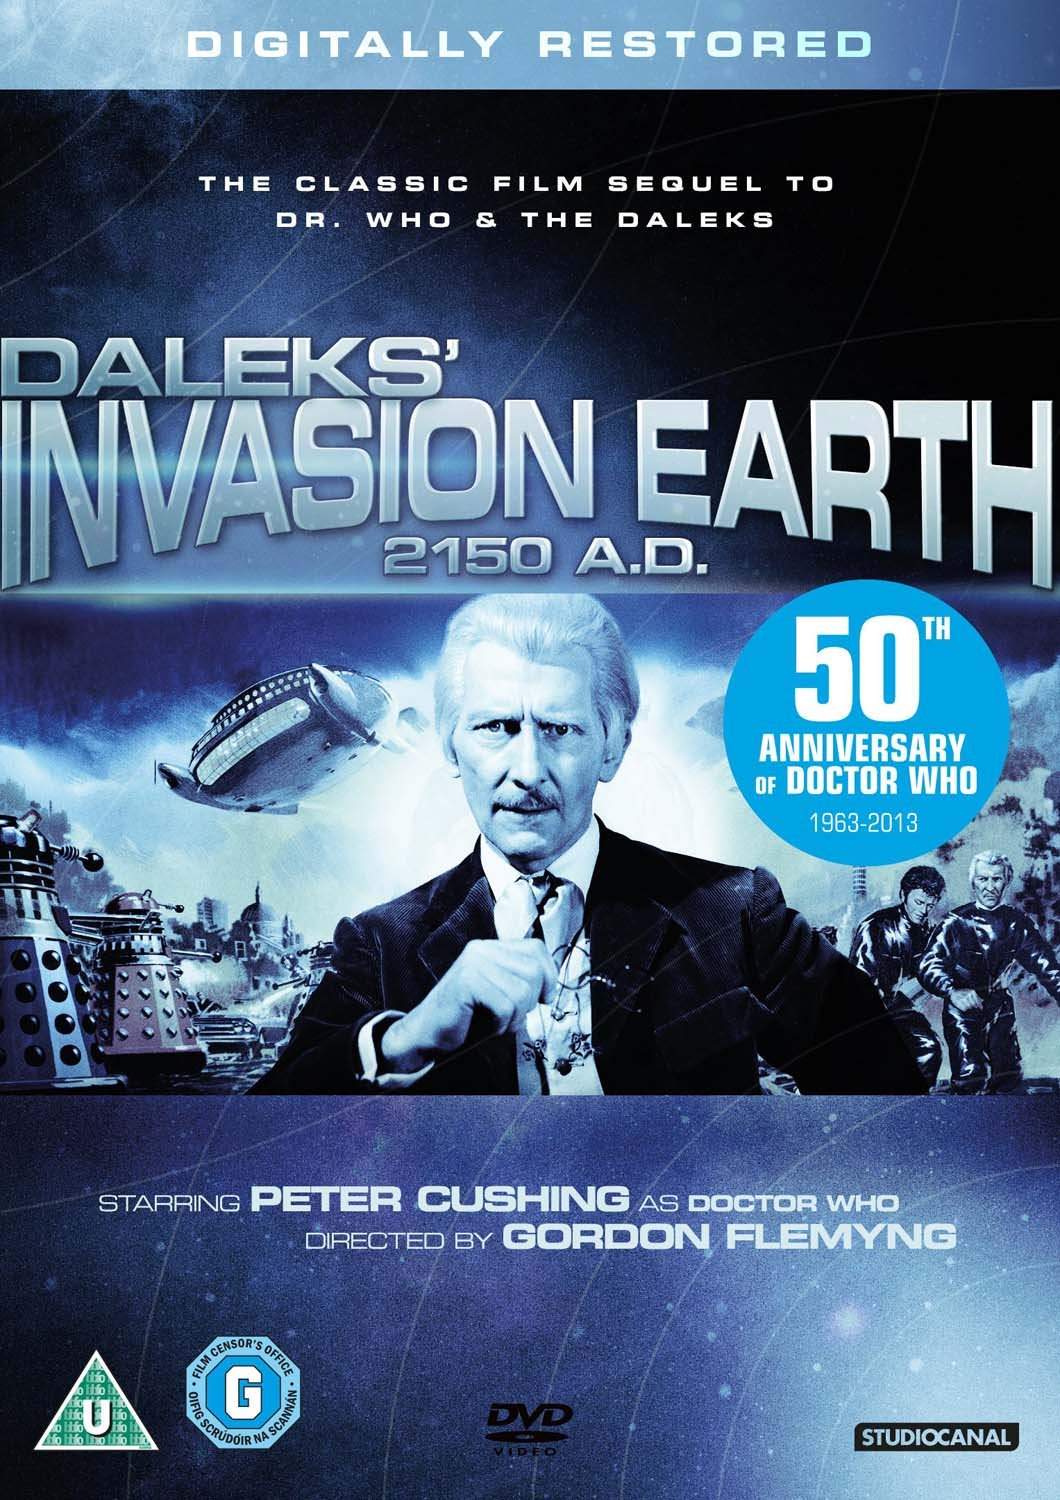 2013 UK DVD release